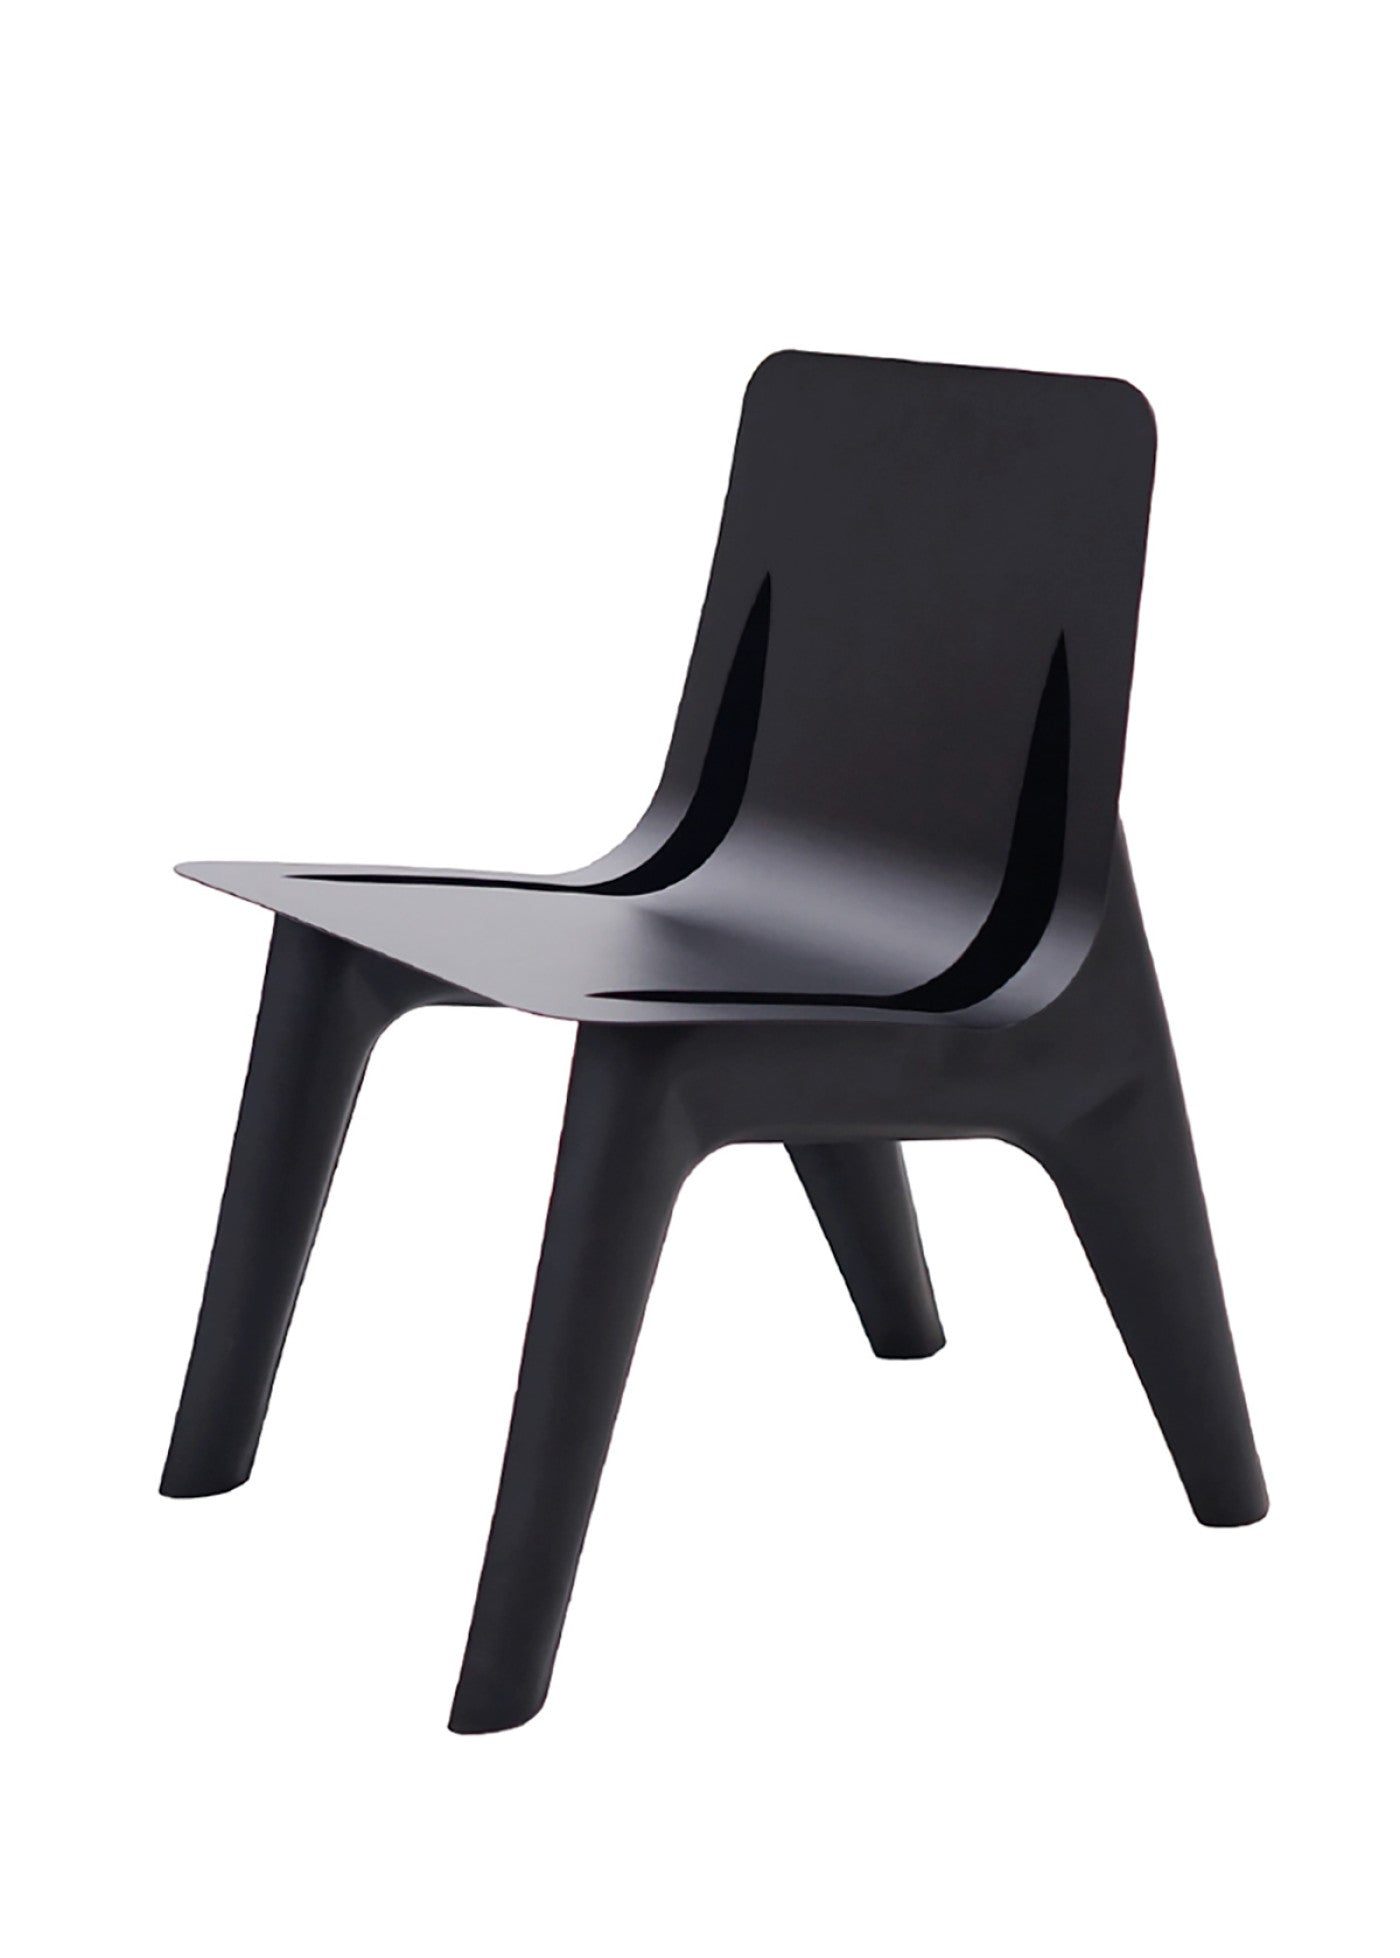 J-Chairs|Seatings|Zieta